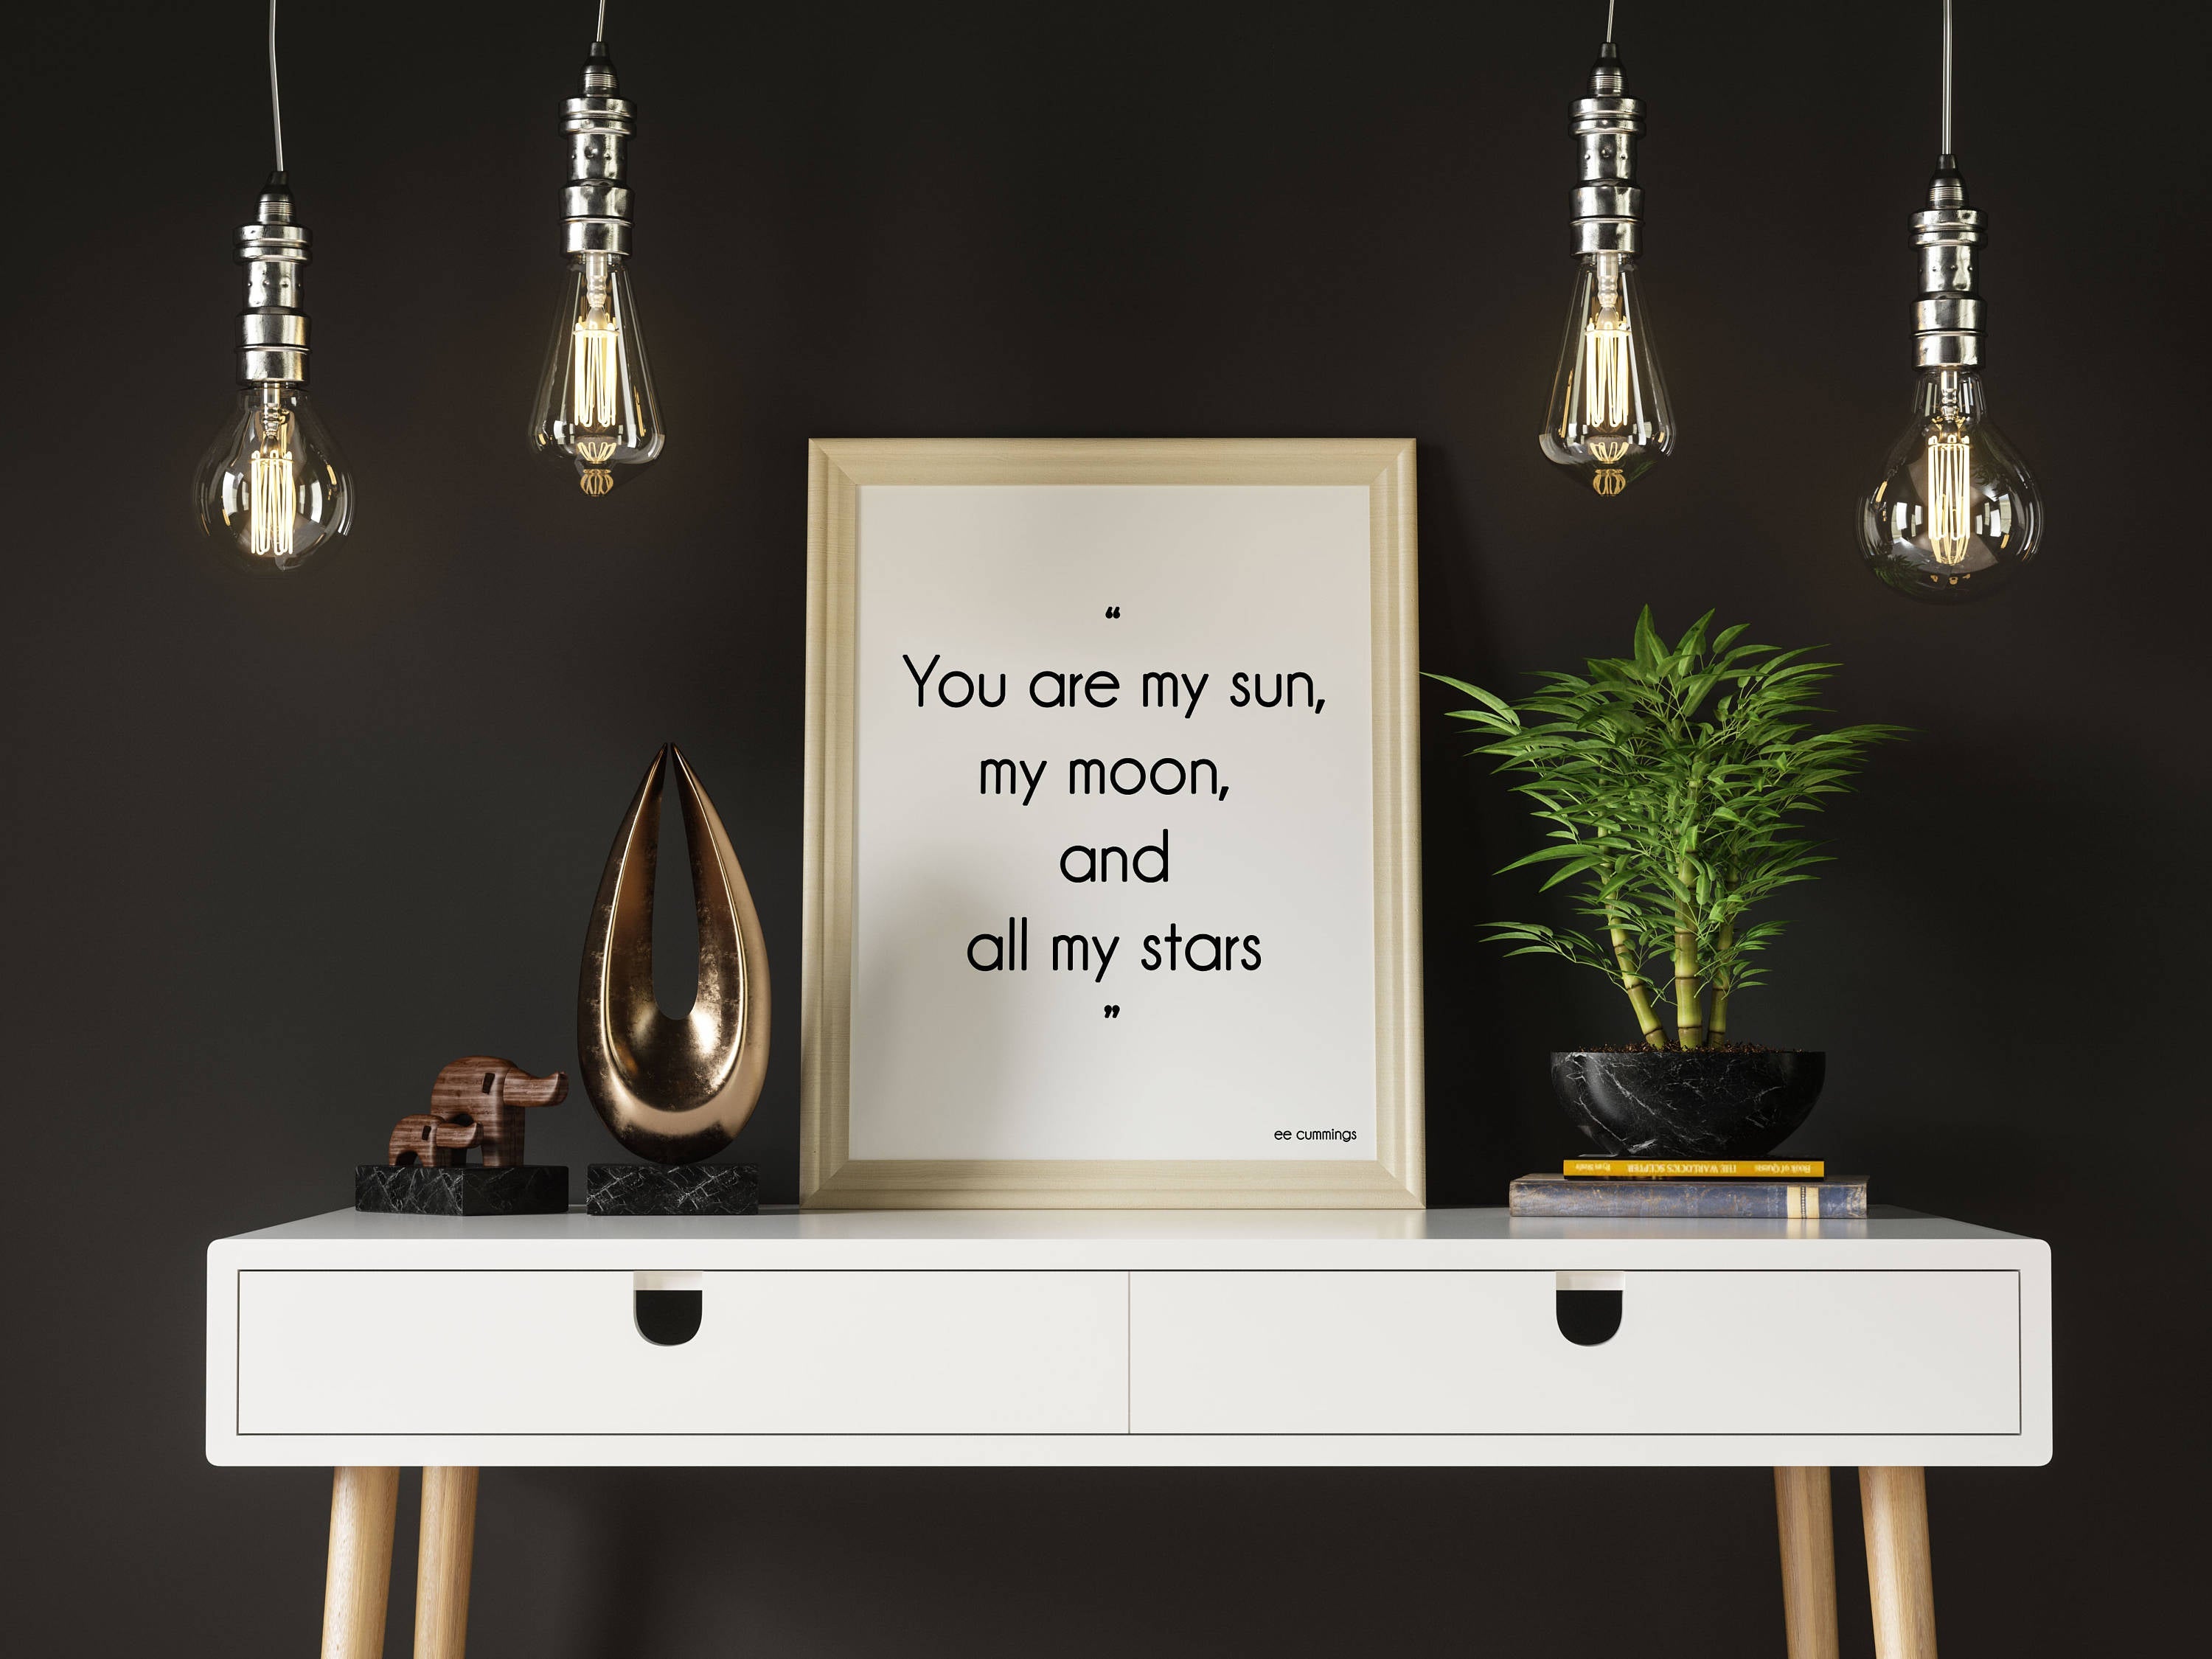 e.e. cummings Love Quote Print, My Sun My Moon - BookQuoteDecor